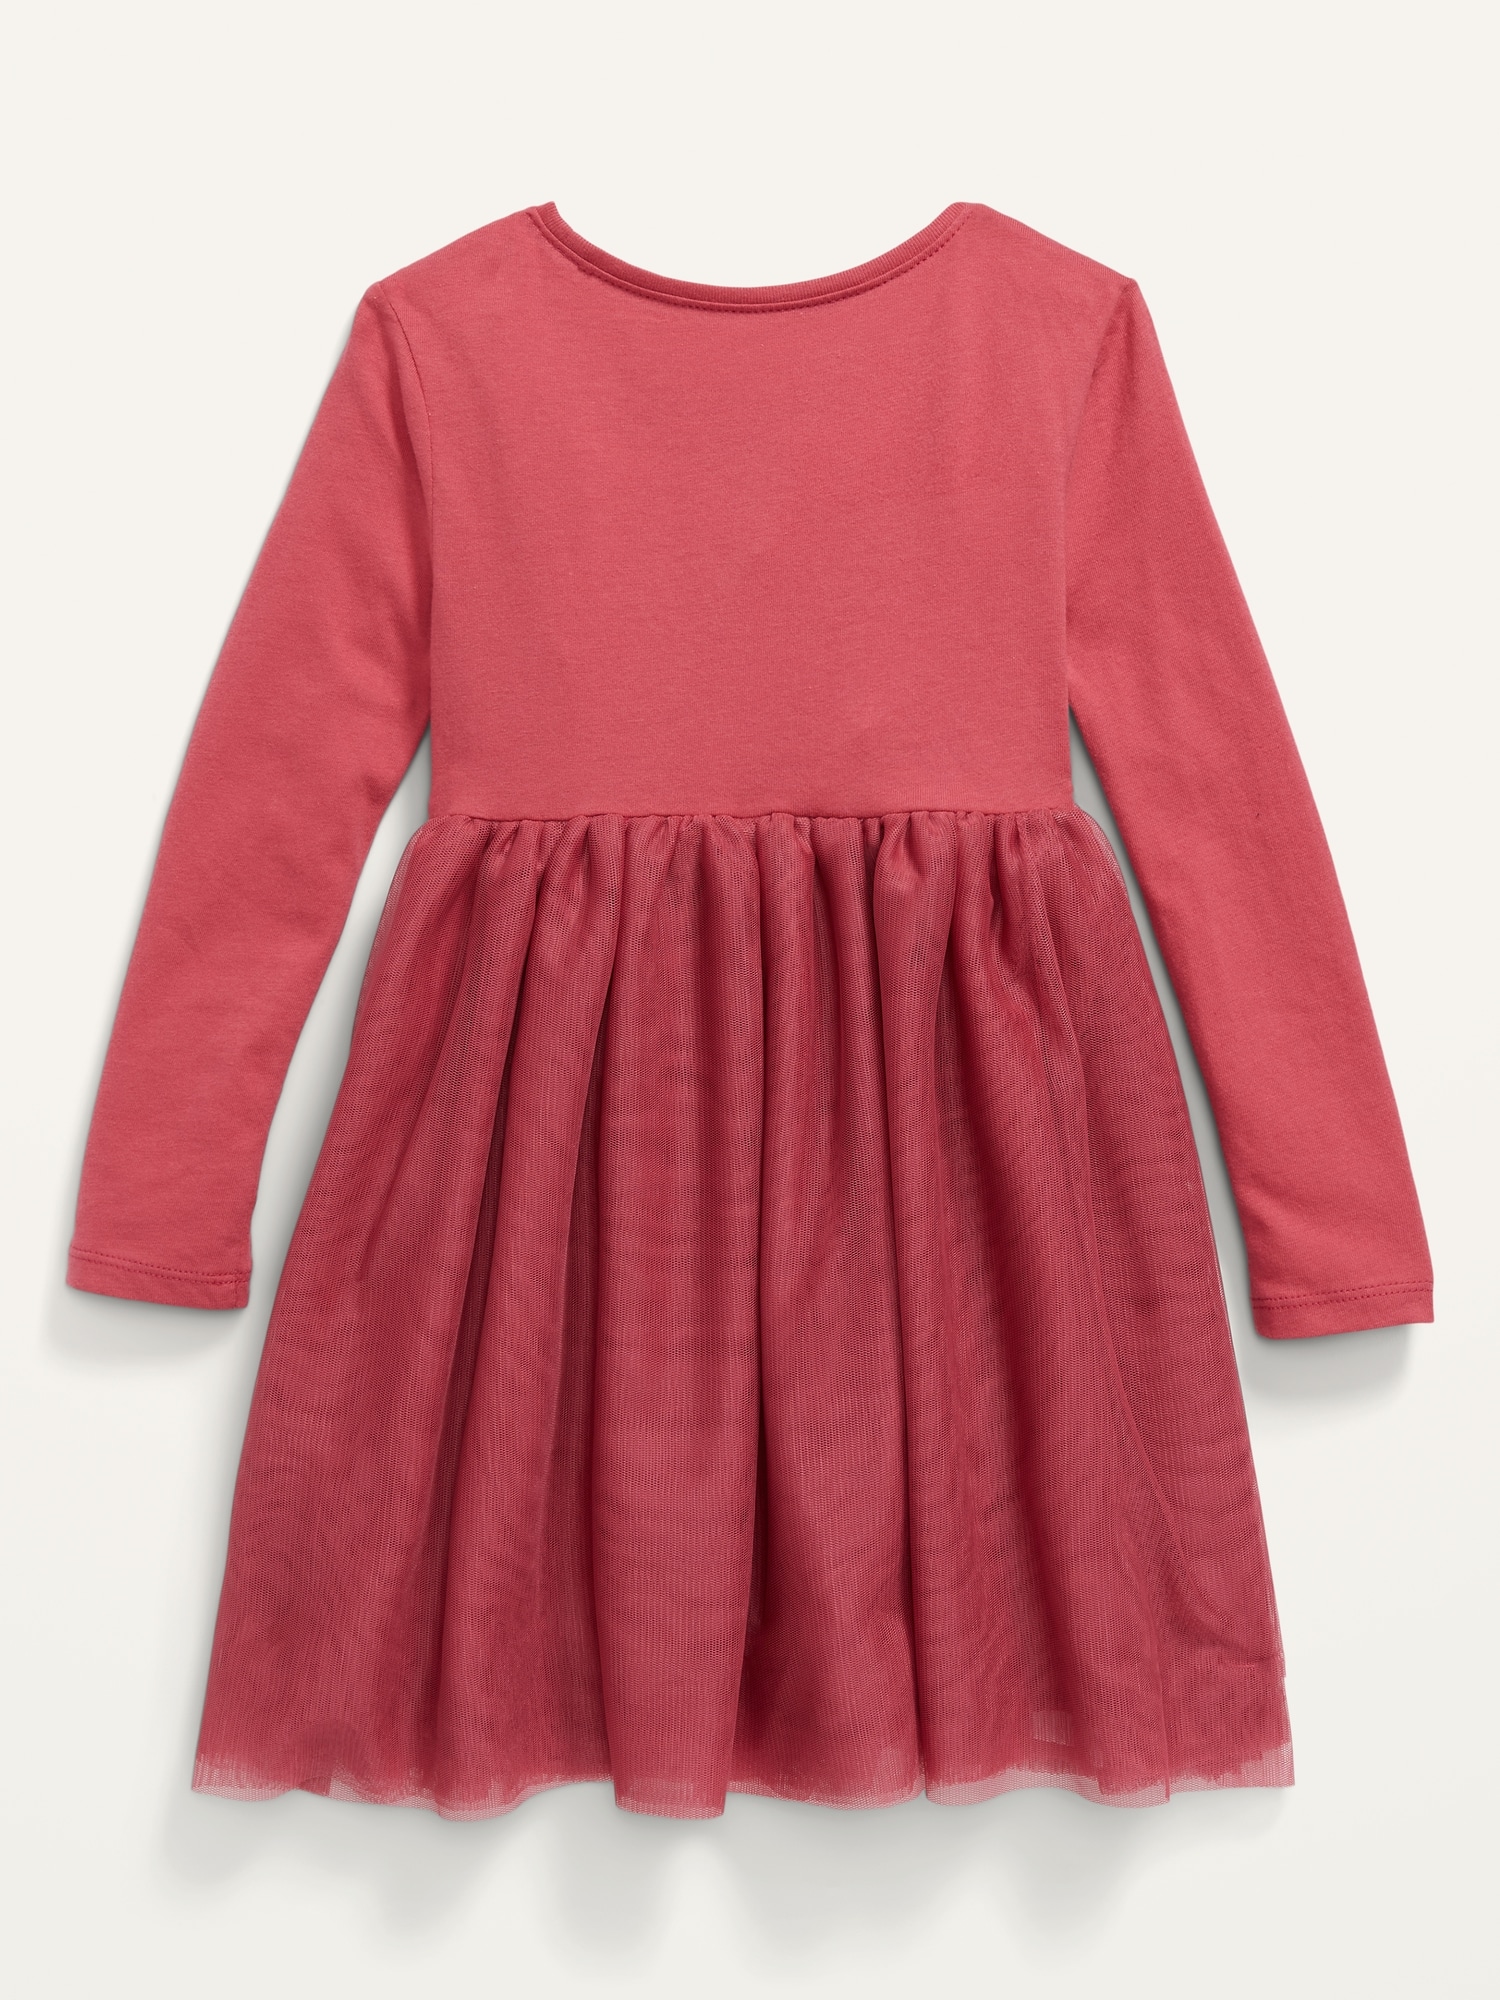 Long-Sleeve Tutu Dress for Toddler Girls | Old Navy